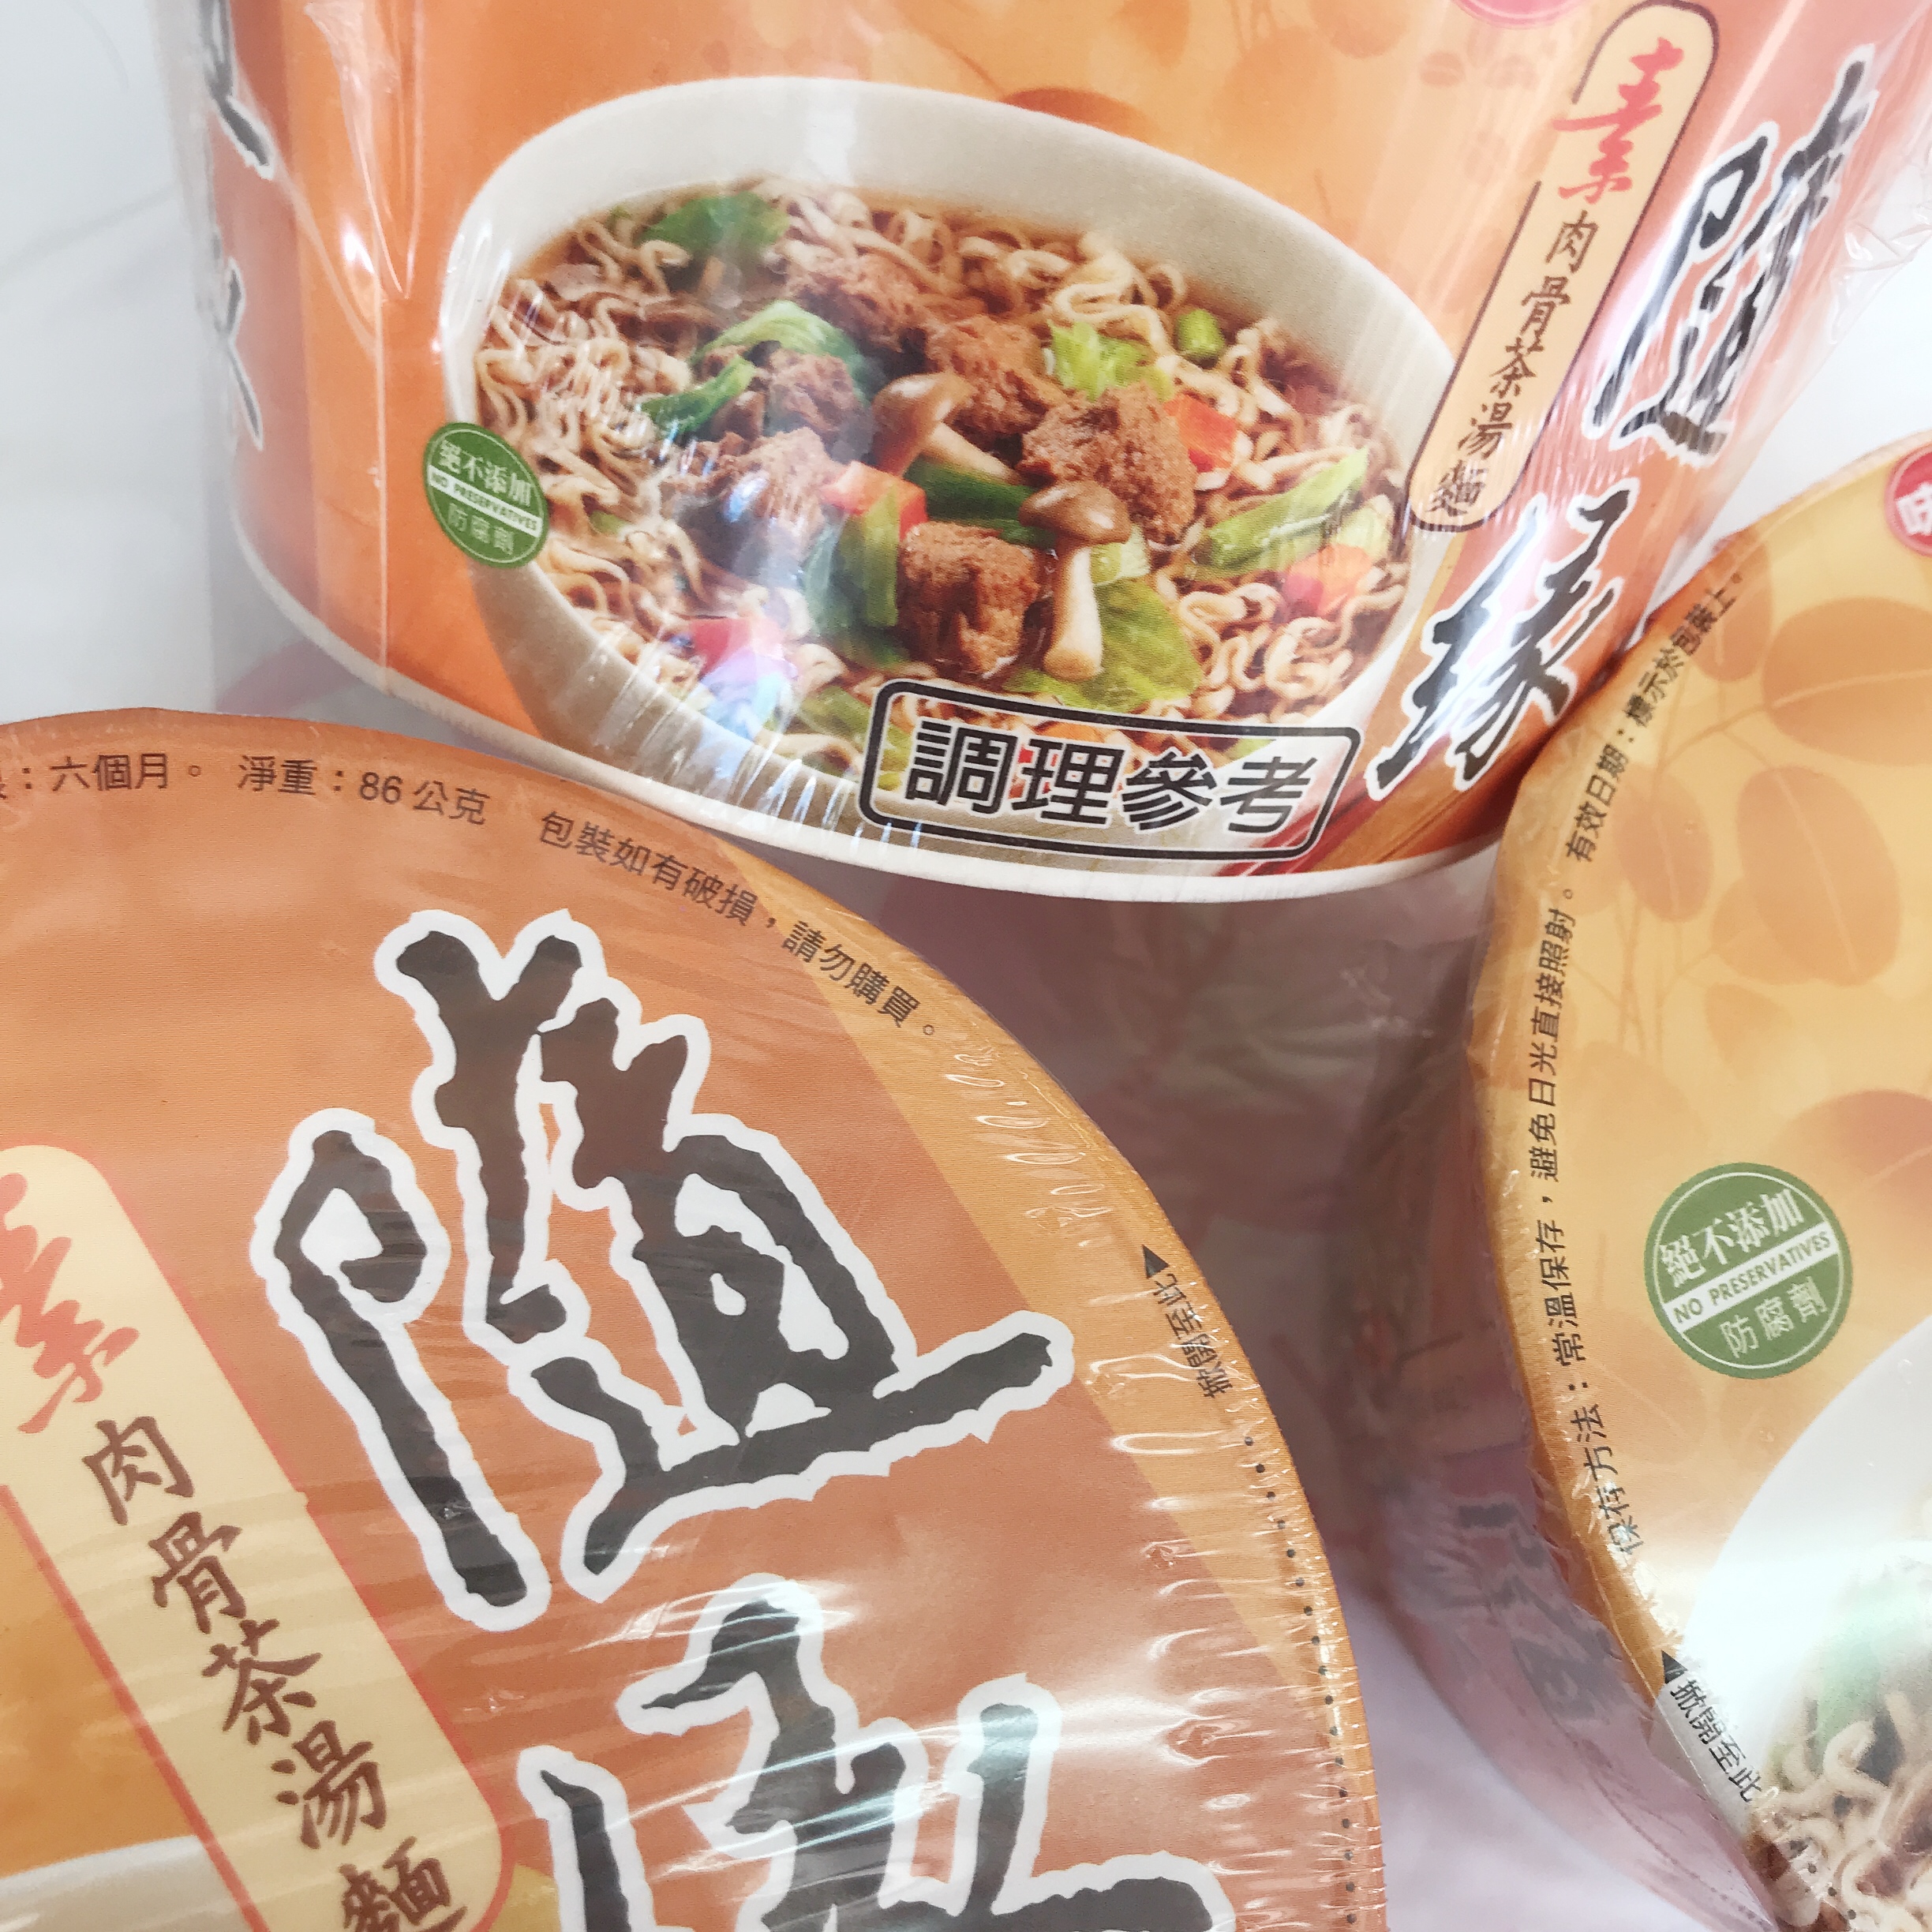 Image Ru Gu Cha Mian Bah Kut Teh Bowl Noodles 随缘-肉骨茶碗面 90grams